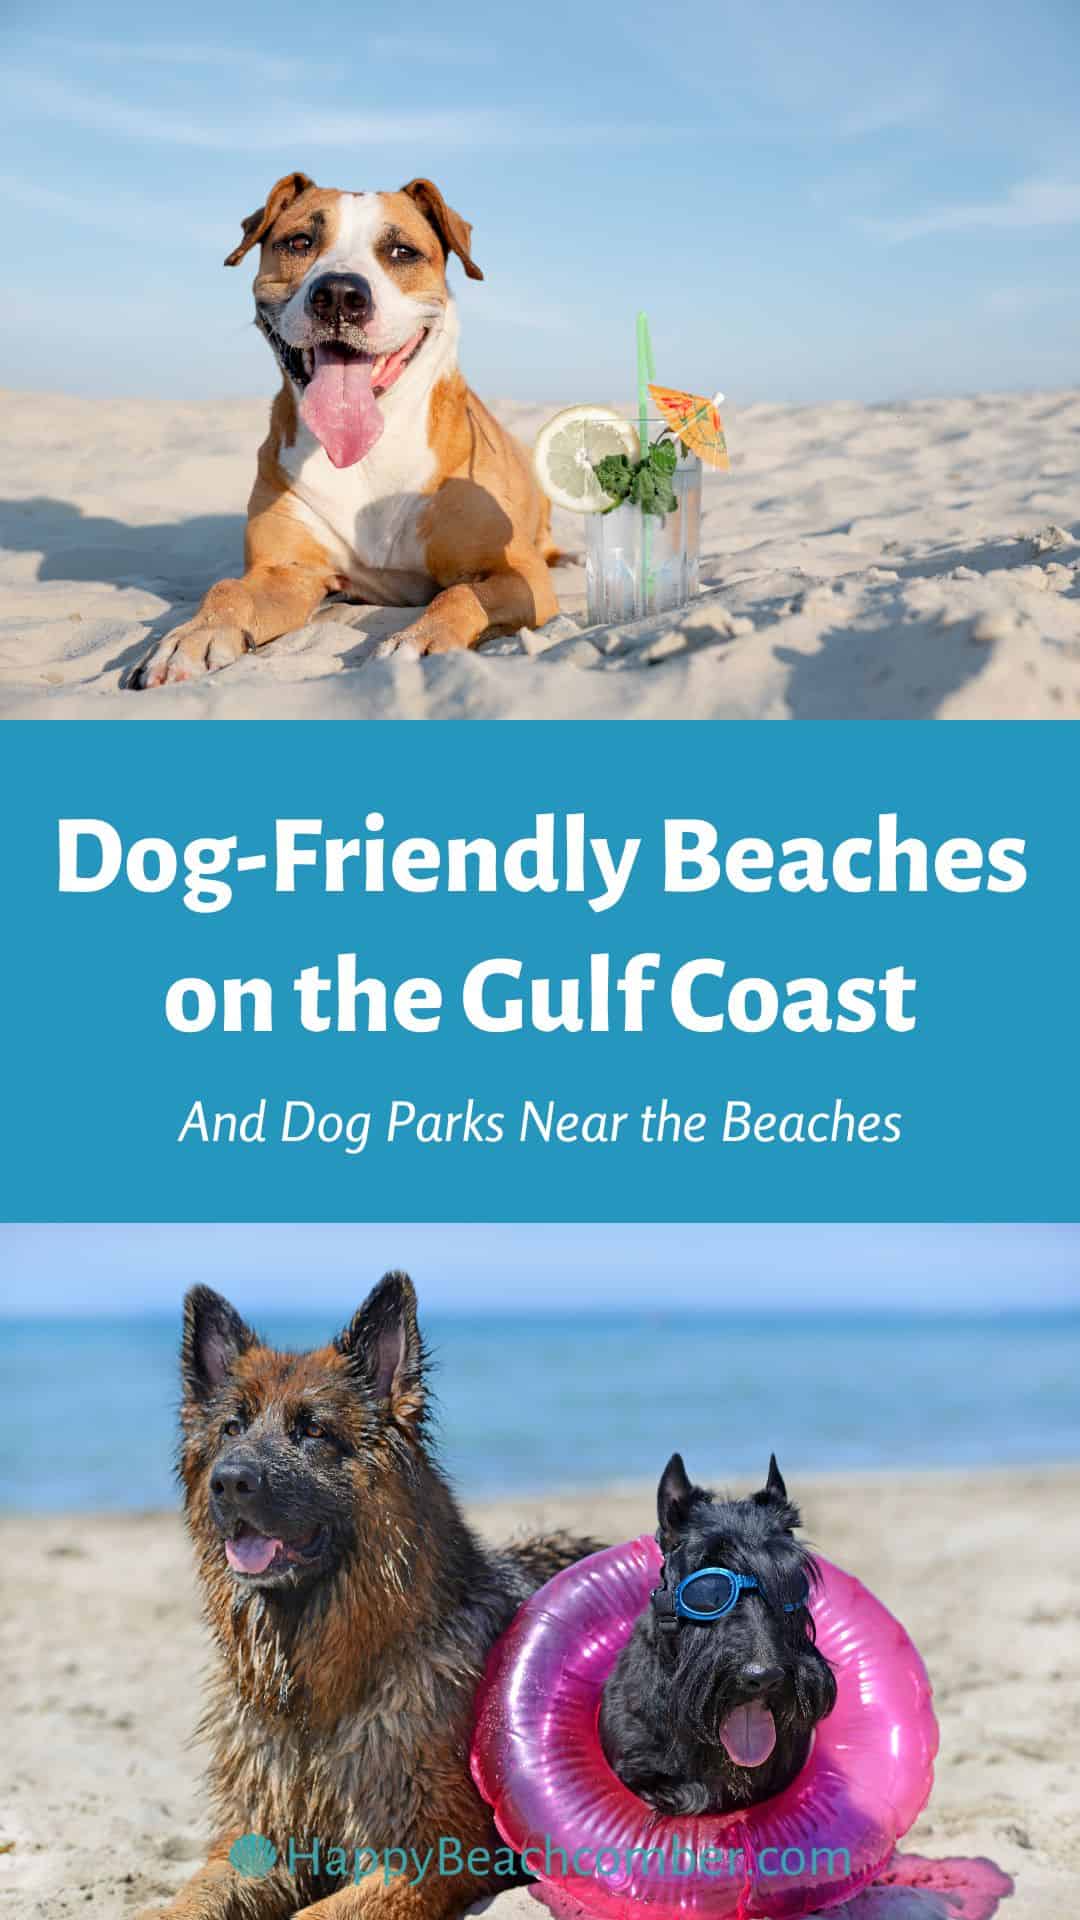 Dog-Friendly Beaches on the Gulf Coast